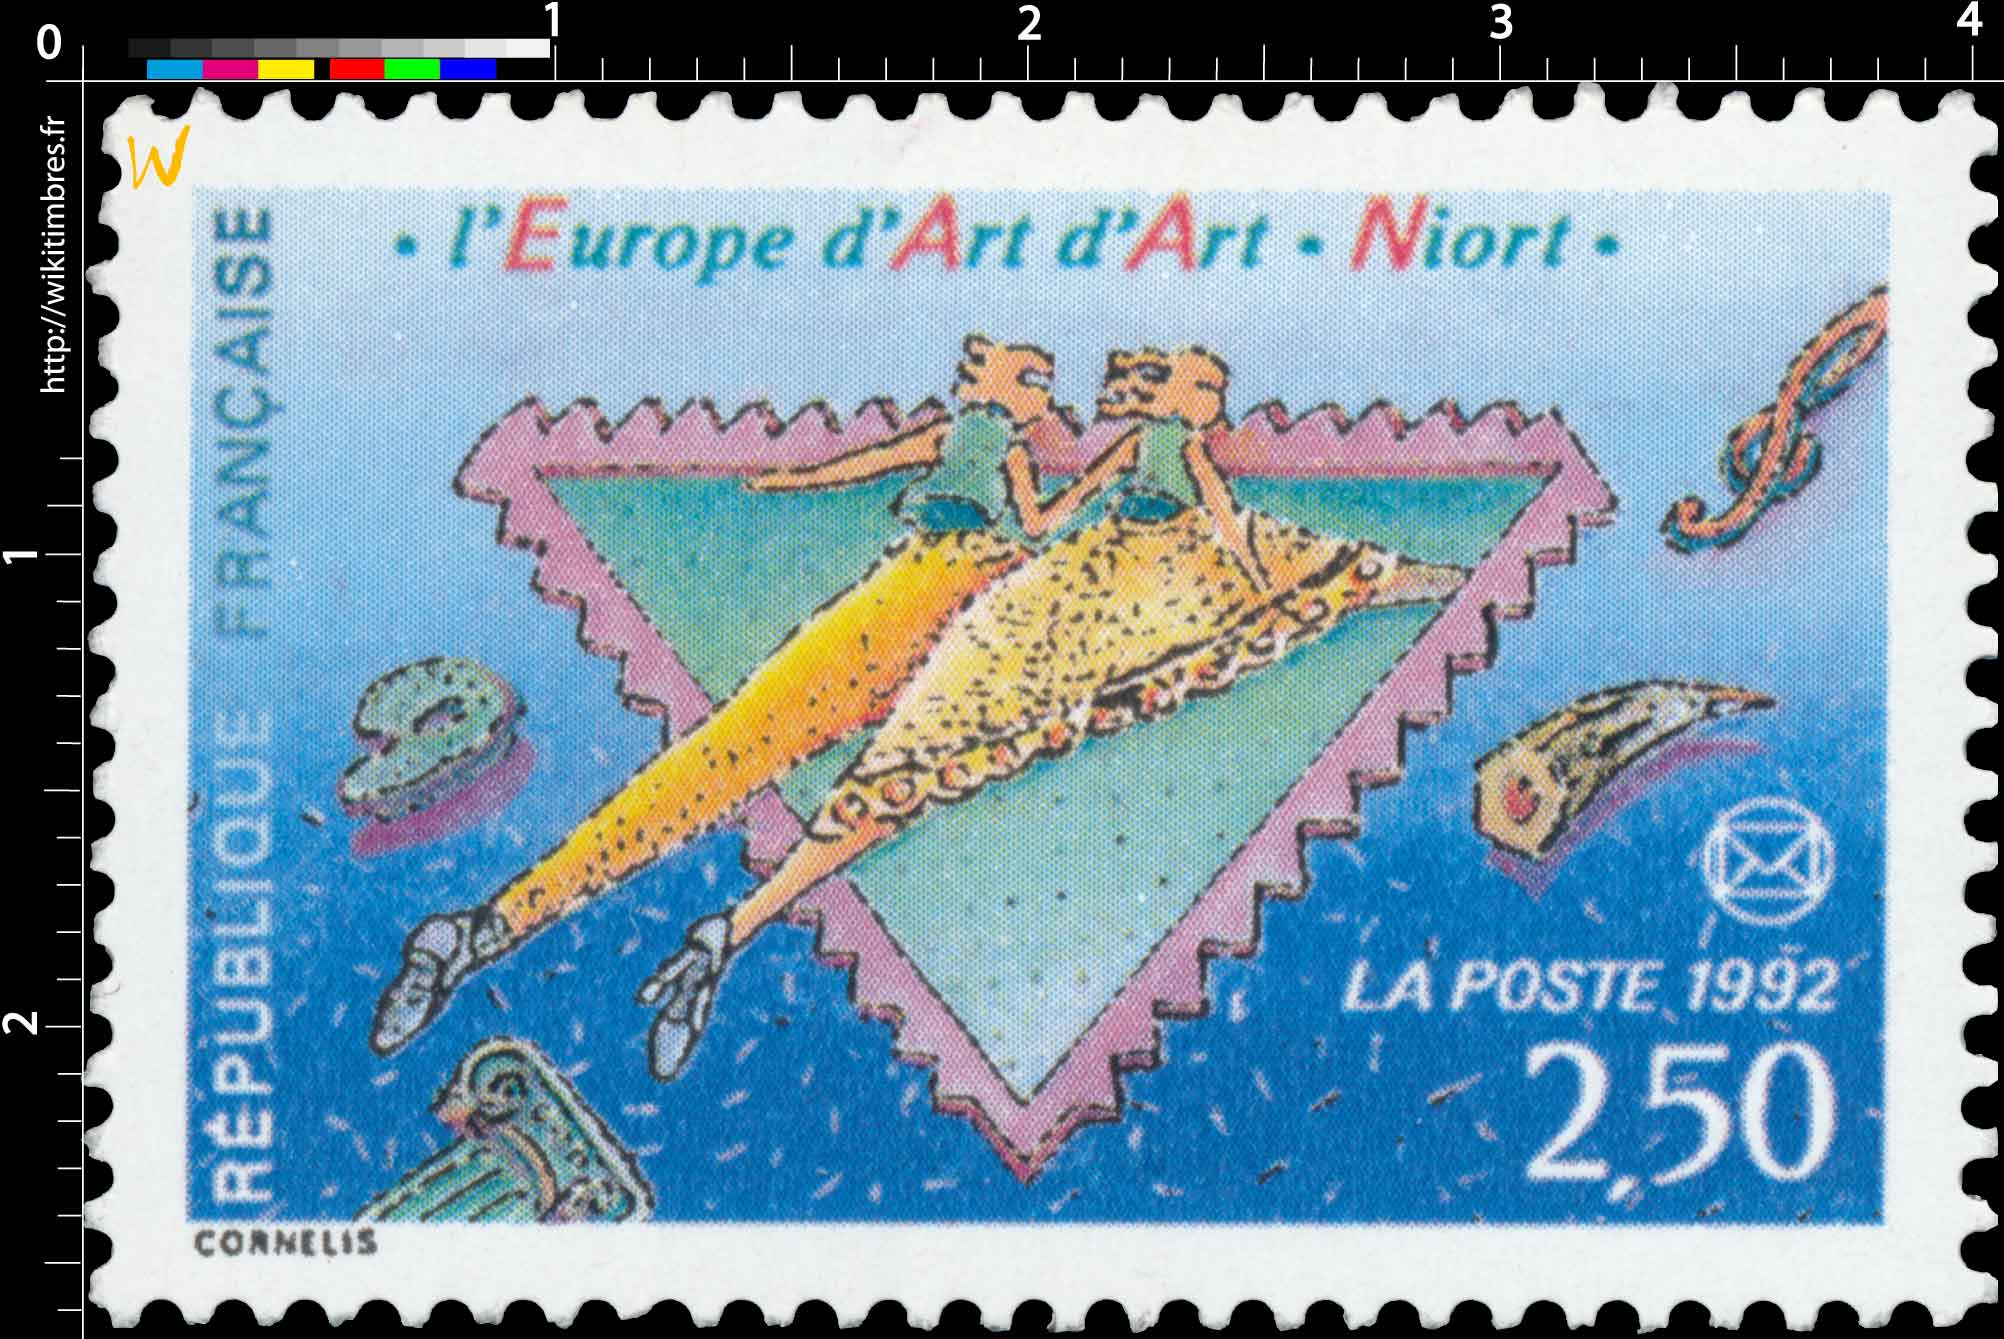 1992. L'Europe d'Art d'Art. Niort.